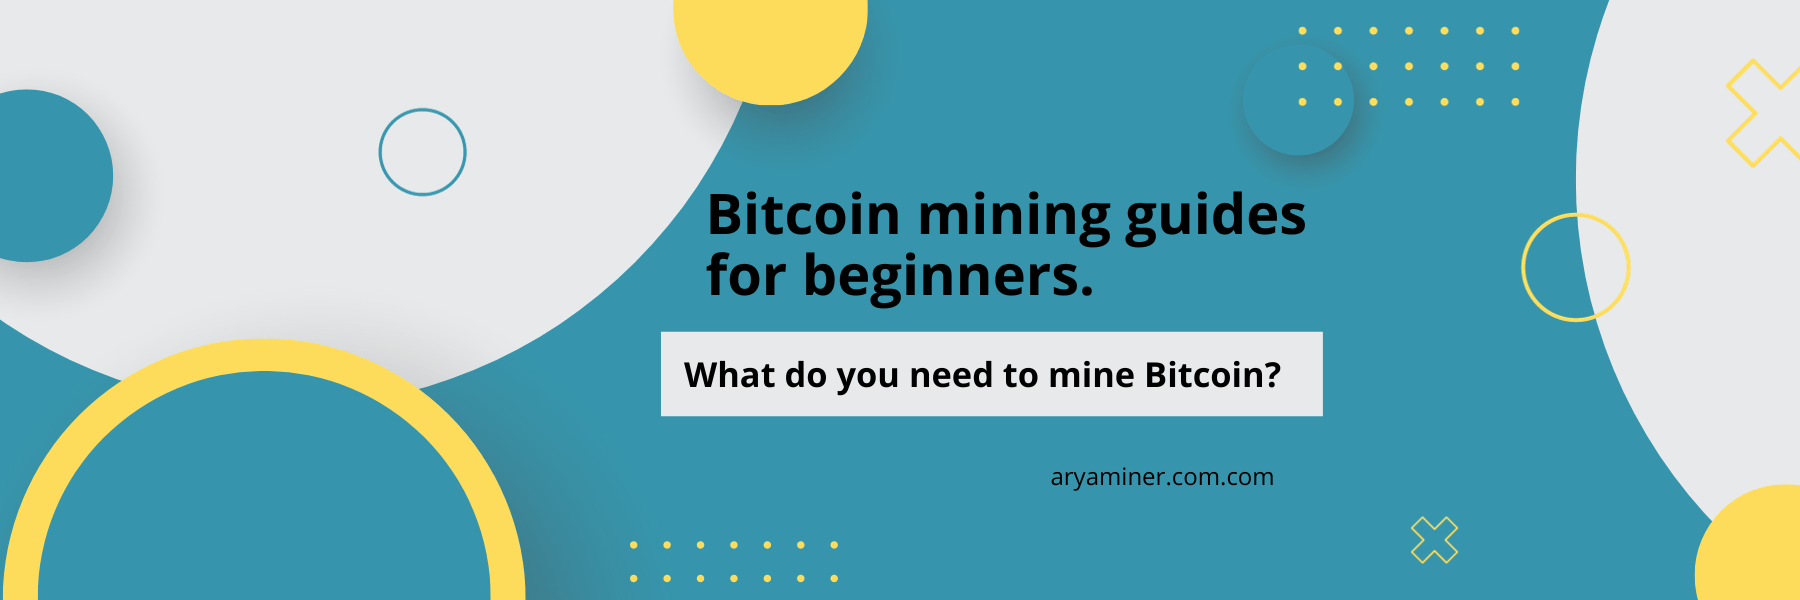 Tips for Bitcoin mining beginners - Aryaminer